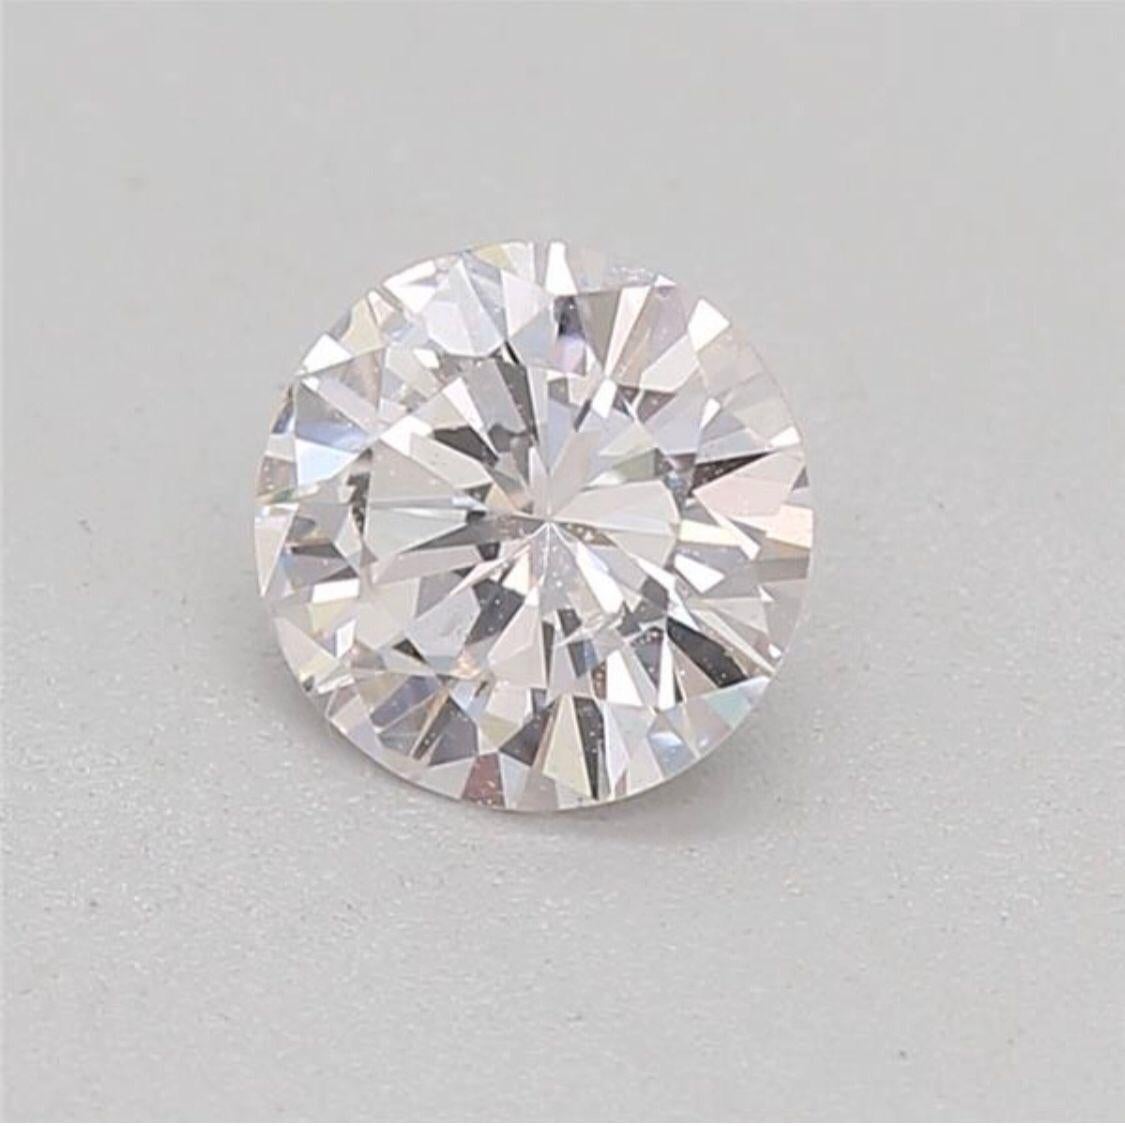 Diamant rose pâle taille ronde de 0,31 carat de pureté SI1 certifié CGL en vente 9